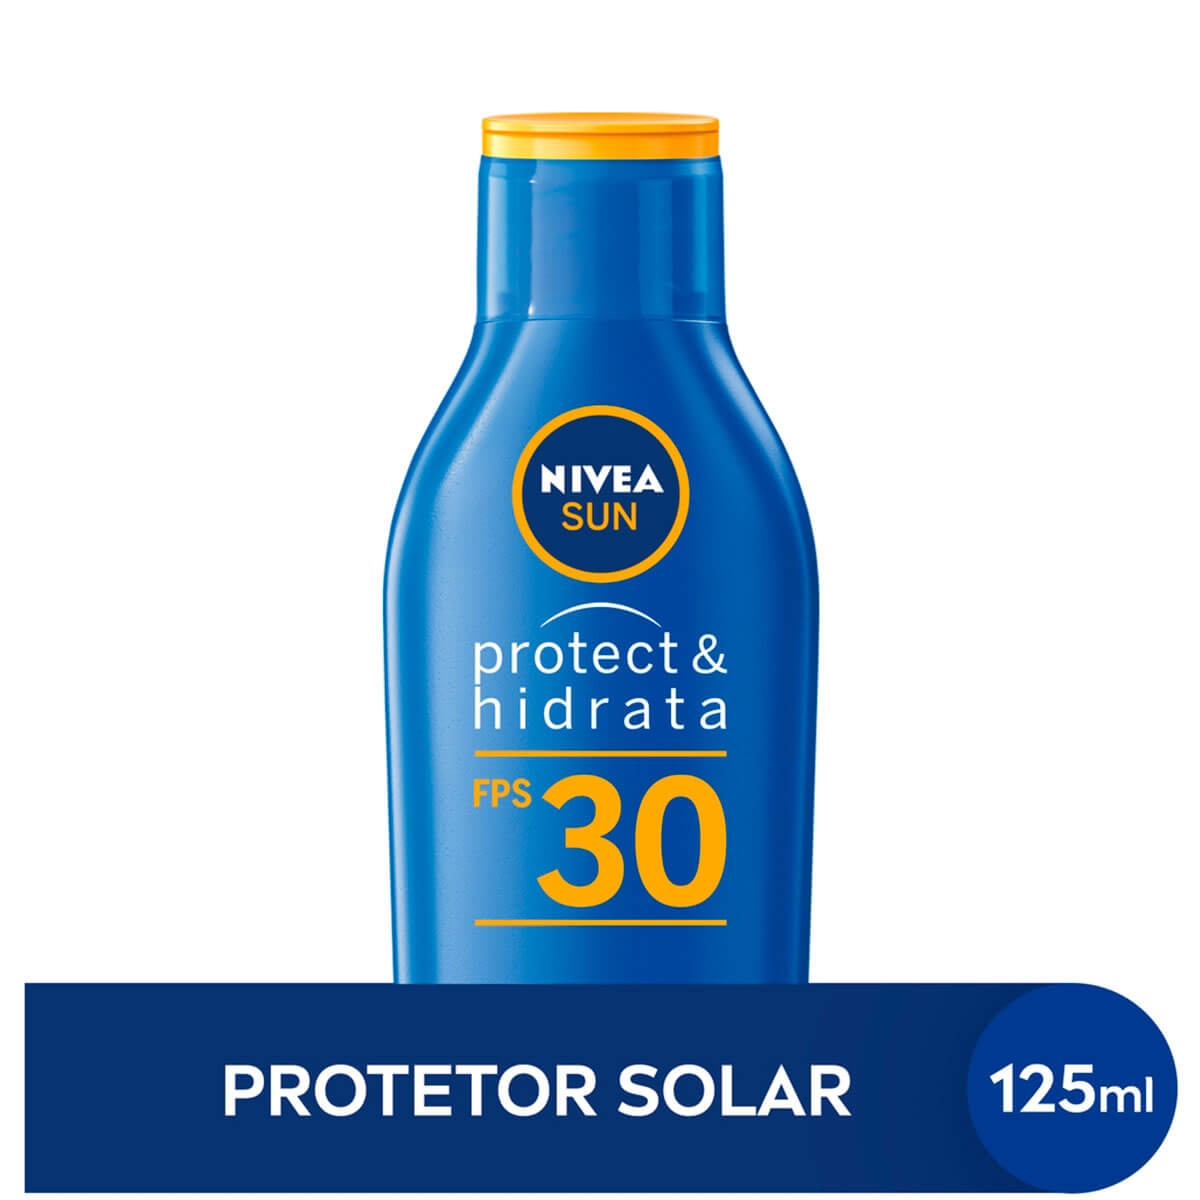 Protetor Solar Nivea Sun Protect & Hidrata FPS30 125ml